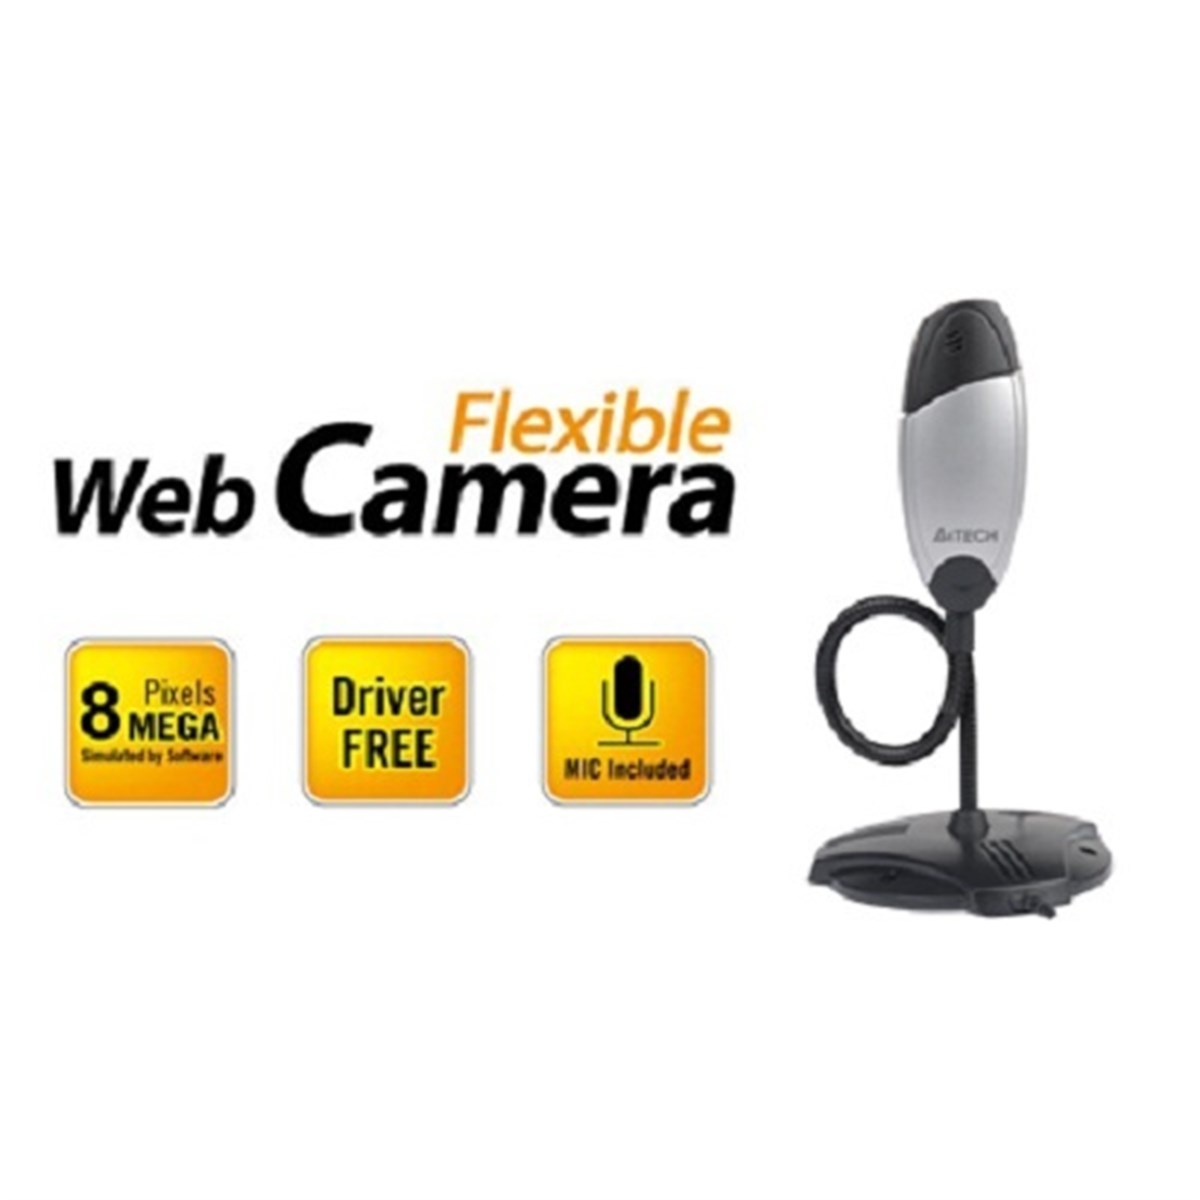 A4 TECH PK636K Webcam